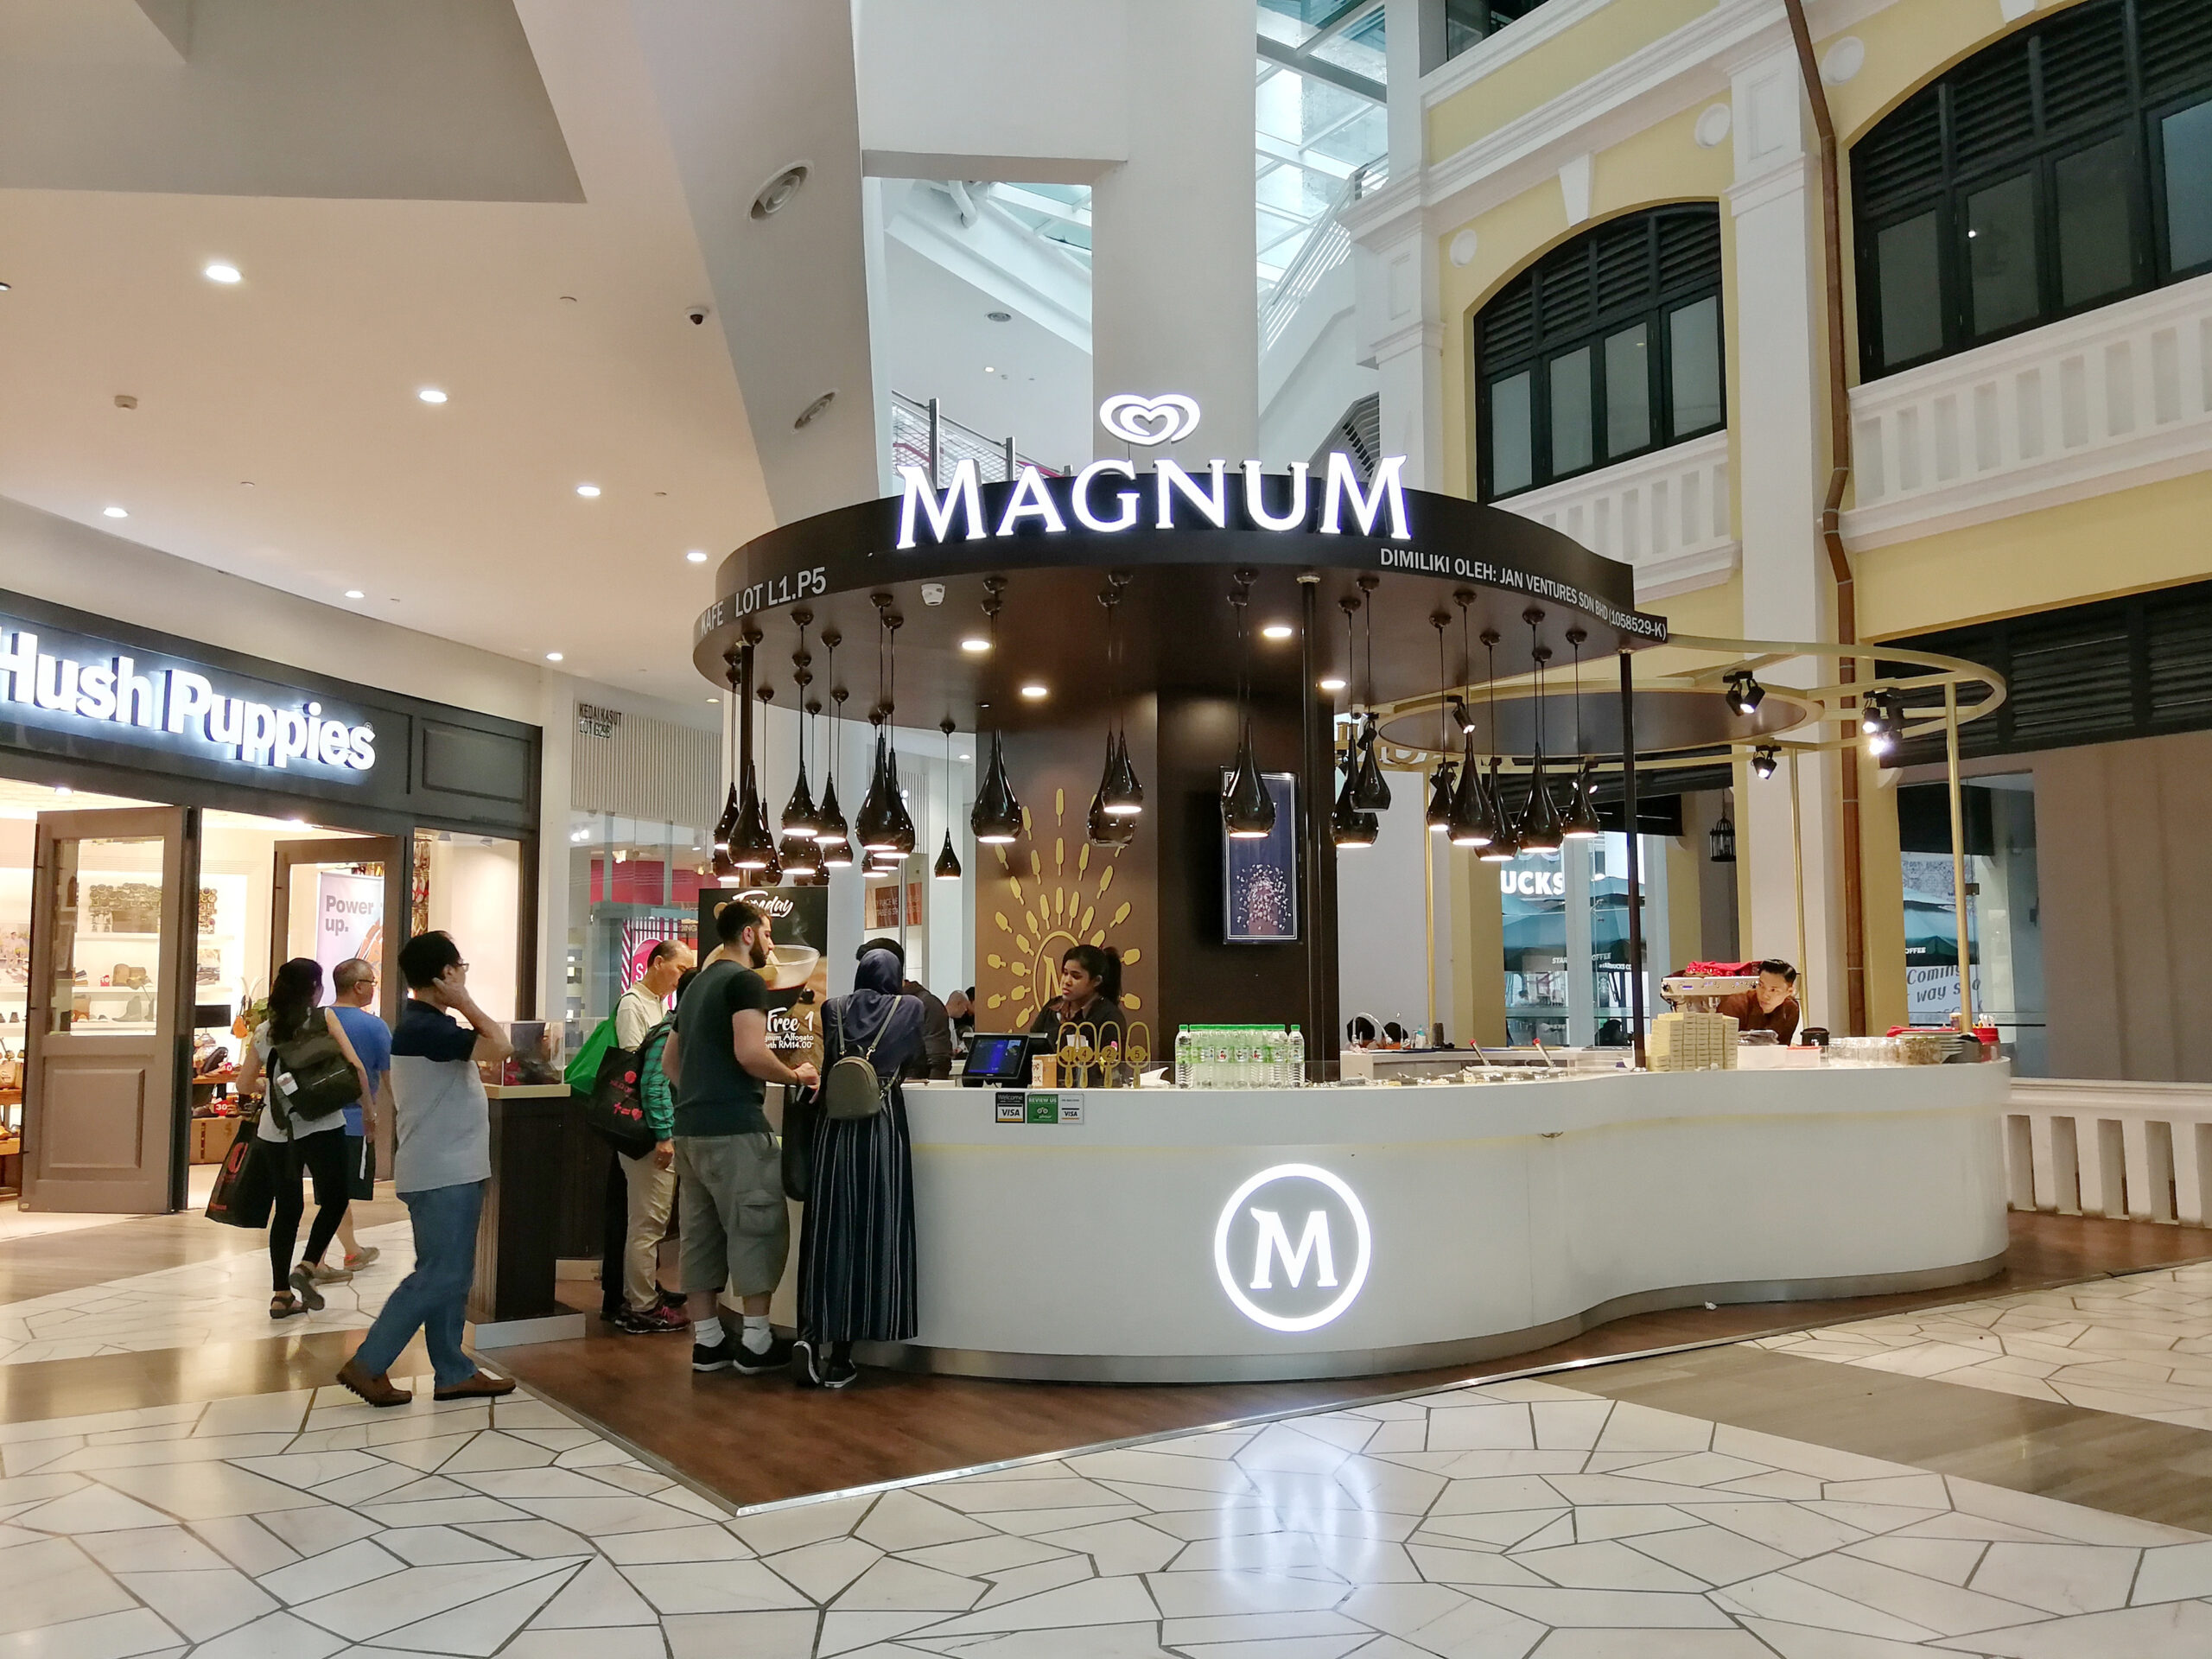 Georgetown Penang Malaysia. July 24, 2018. Luxury Ice Cream Brand